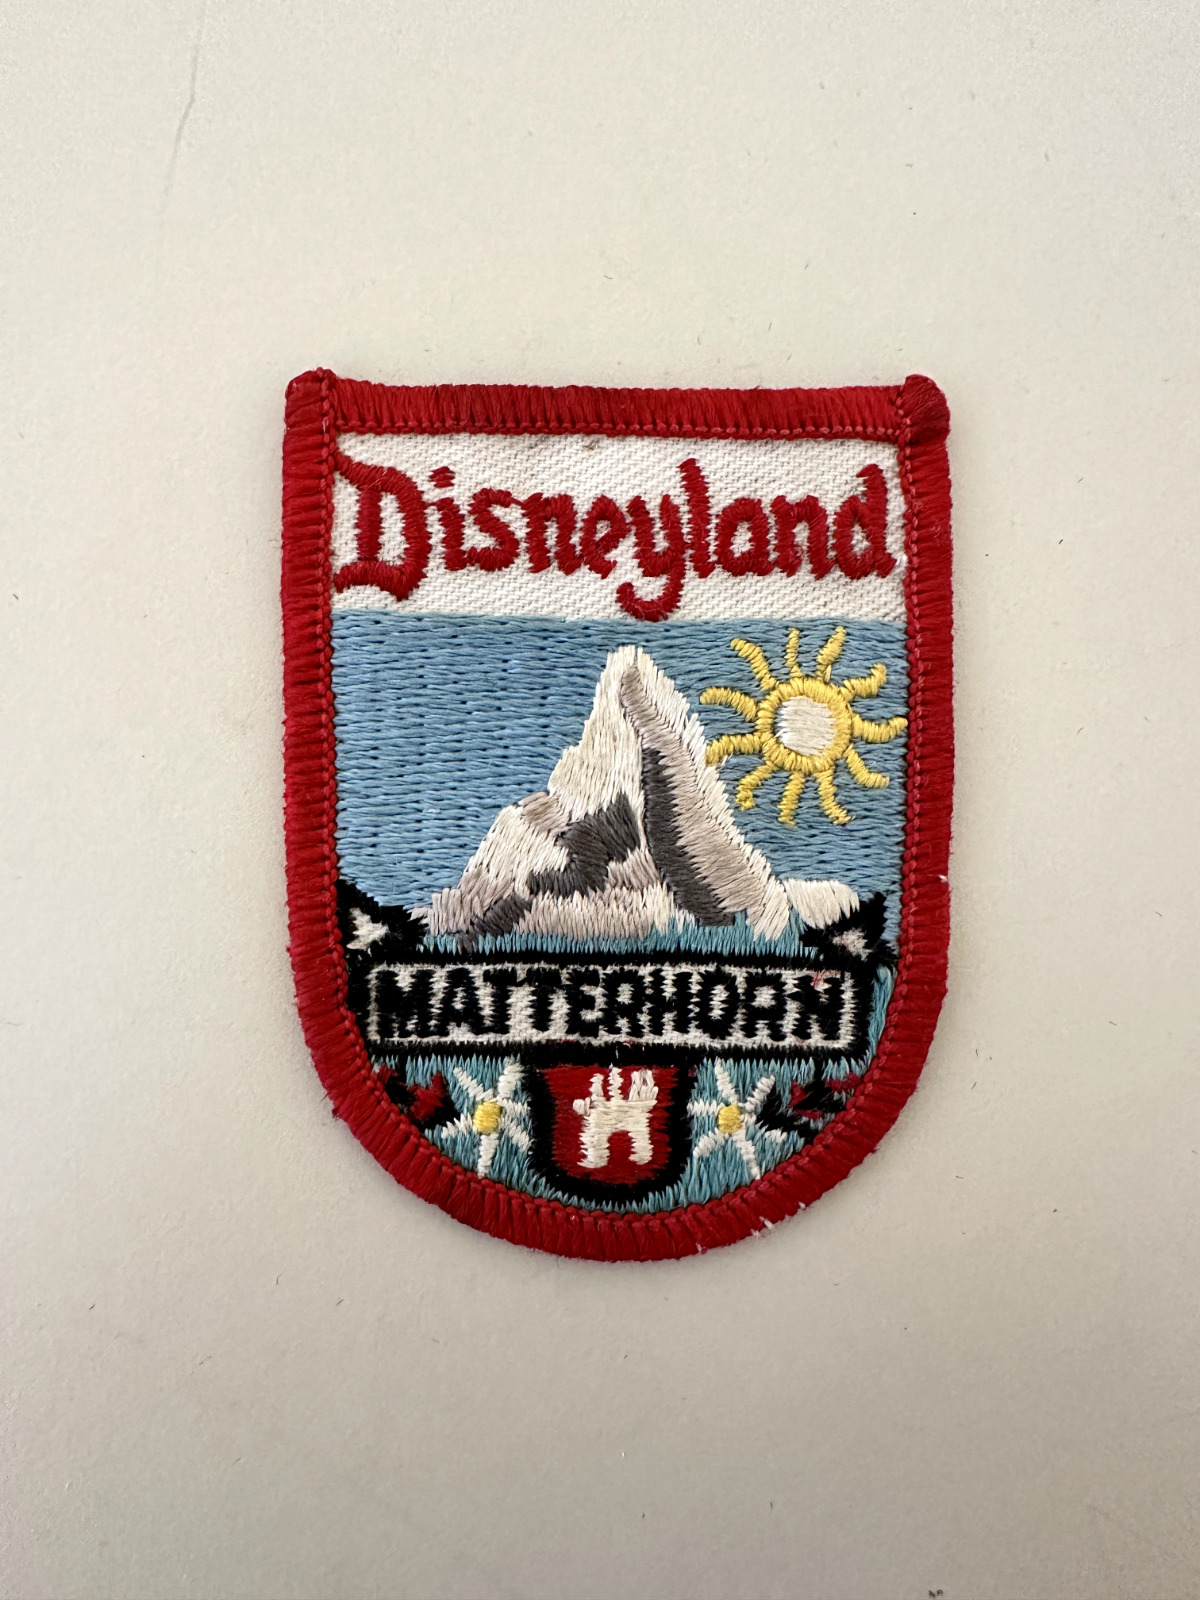 RARE Vtg 1960s Disneyland Matterhorn Bobsleds Patch from Cast Member Uniform